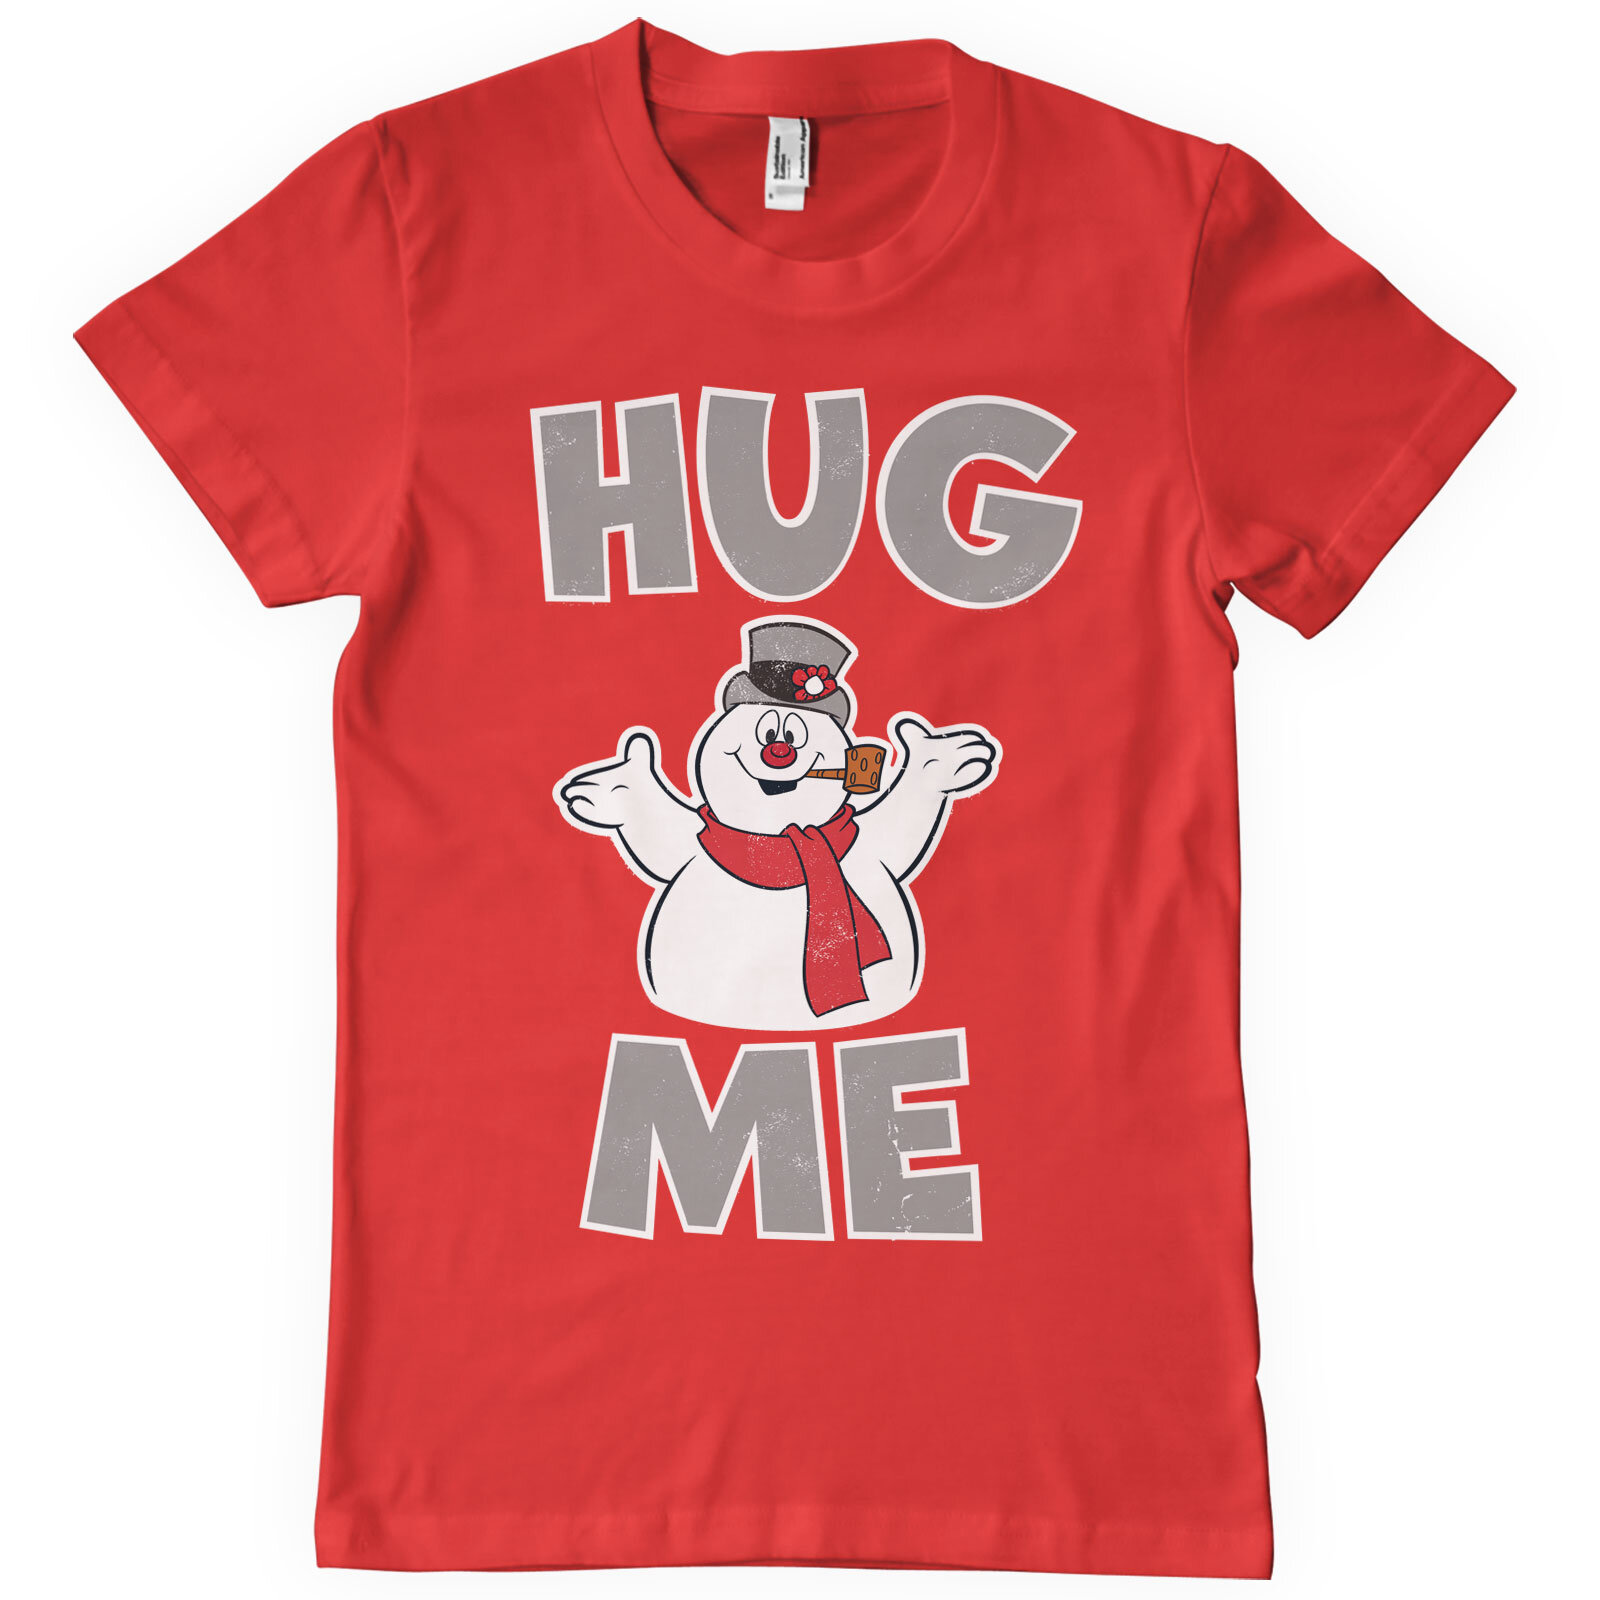 Frosty The Snowman - Hug Me T-Shirt